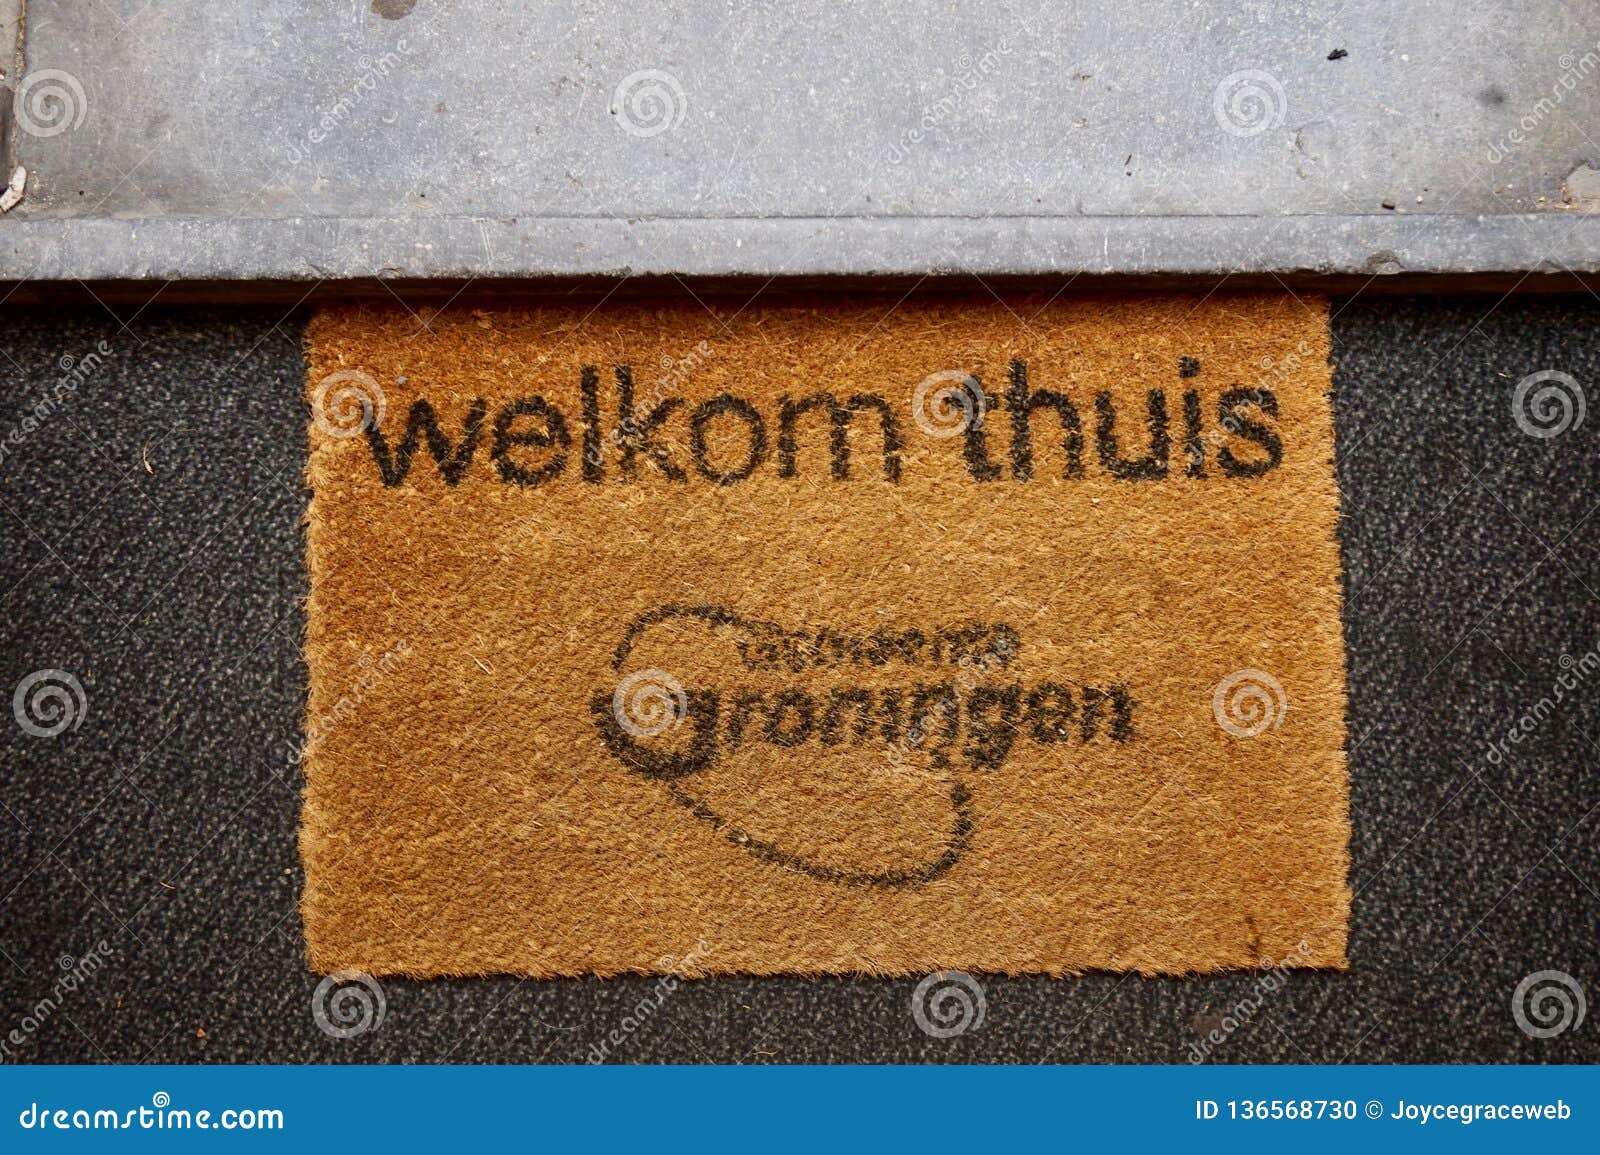 Tilintetgøre Shinkan Etablere Welkom Thuis` Welcome Home Doormat with Groningen City Logo Editorial Image  - Image of gementee, european: 136568730